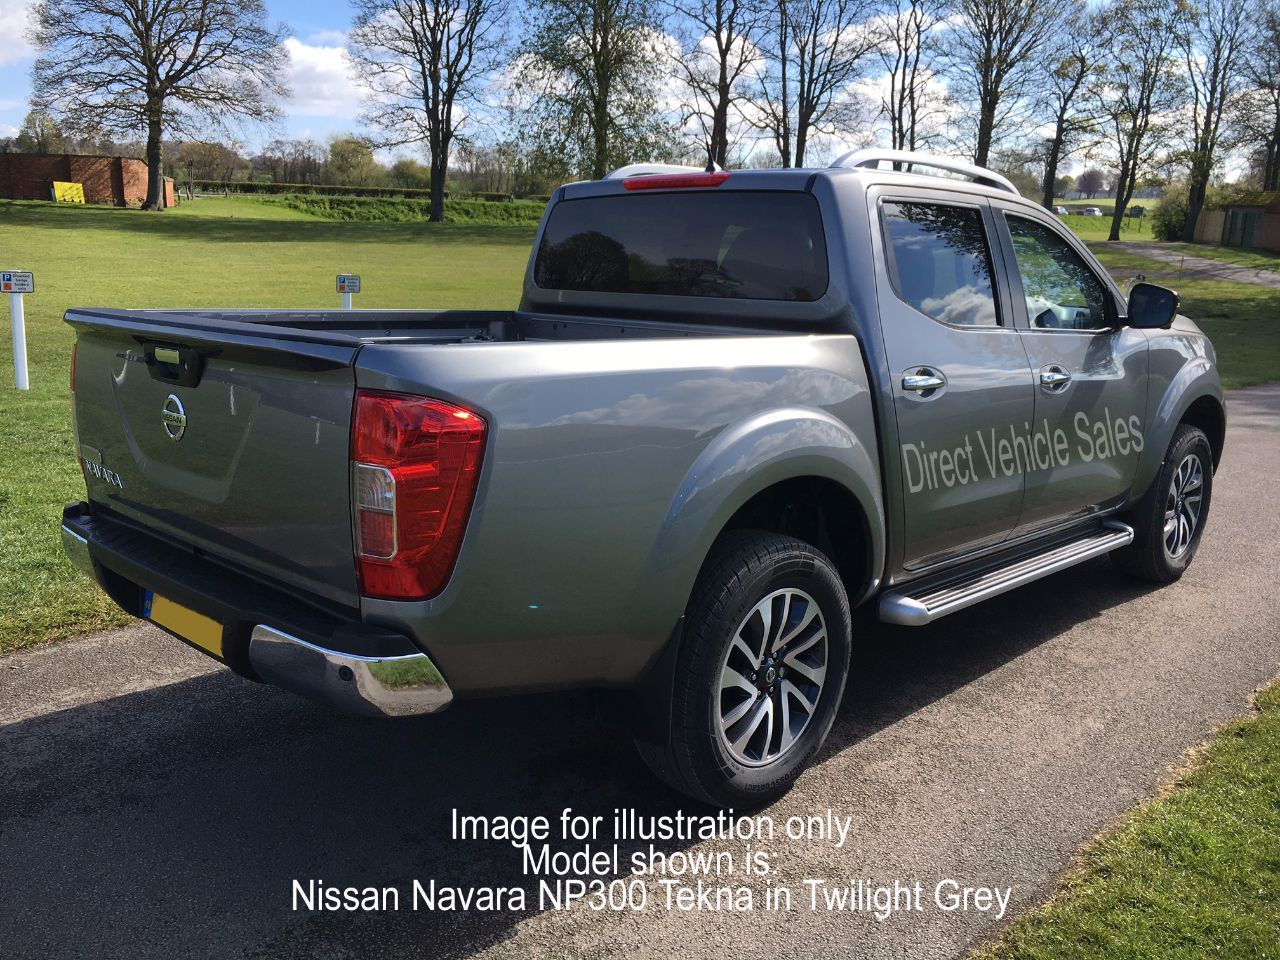 Nissan dealers north yorkshire #10